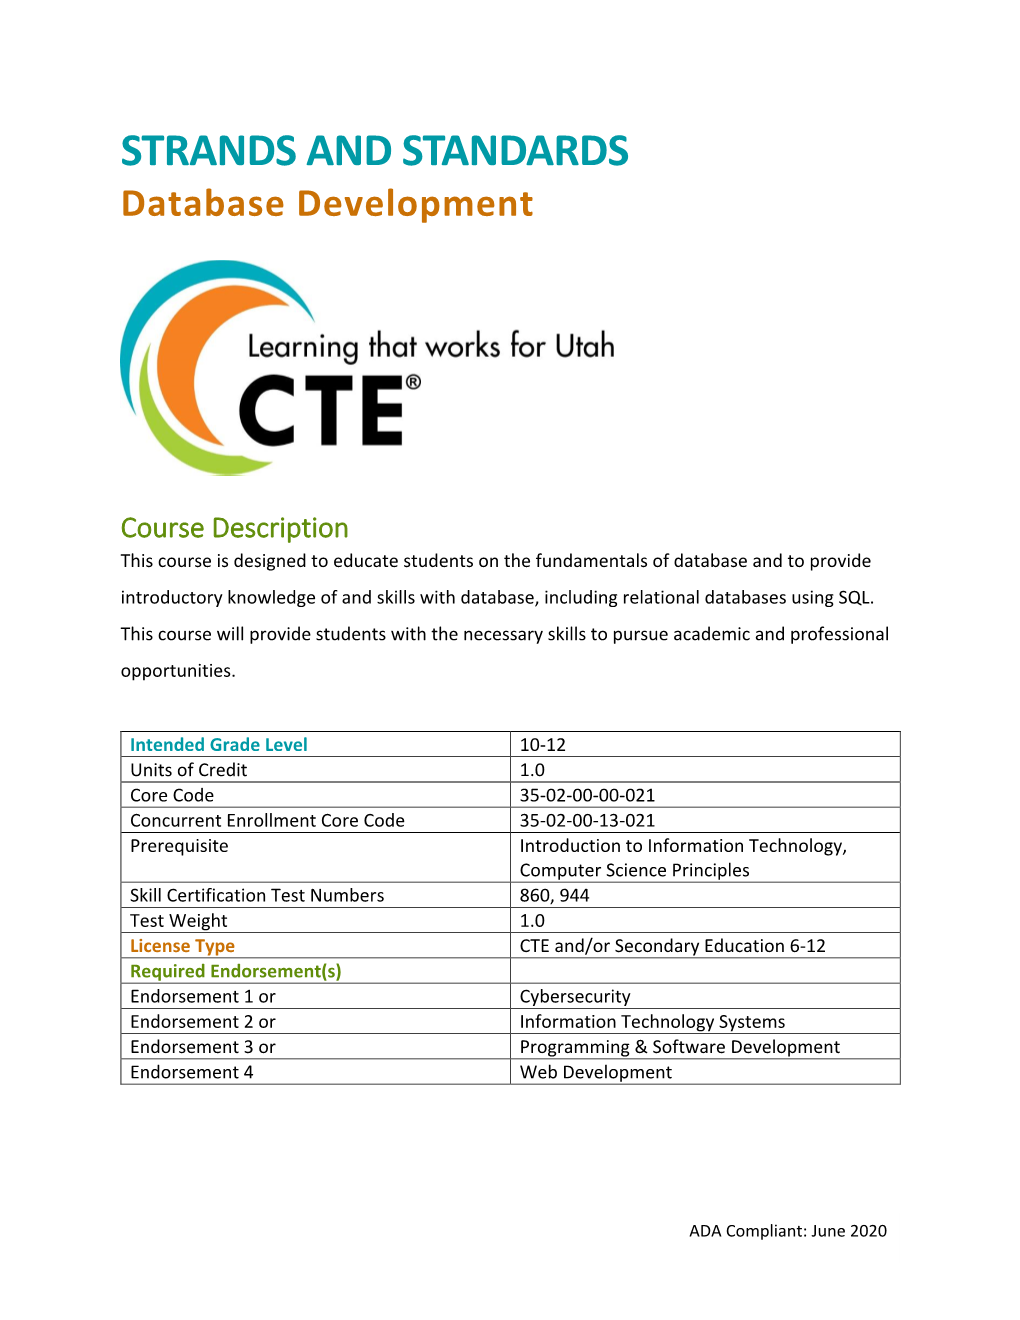 Database Development Strands and Standards